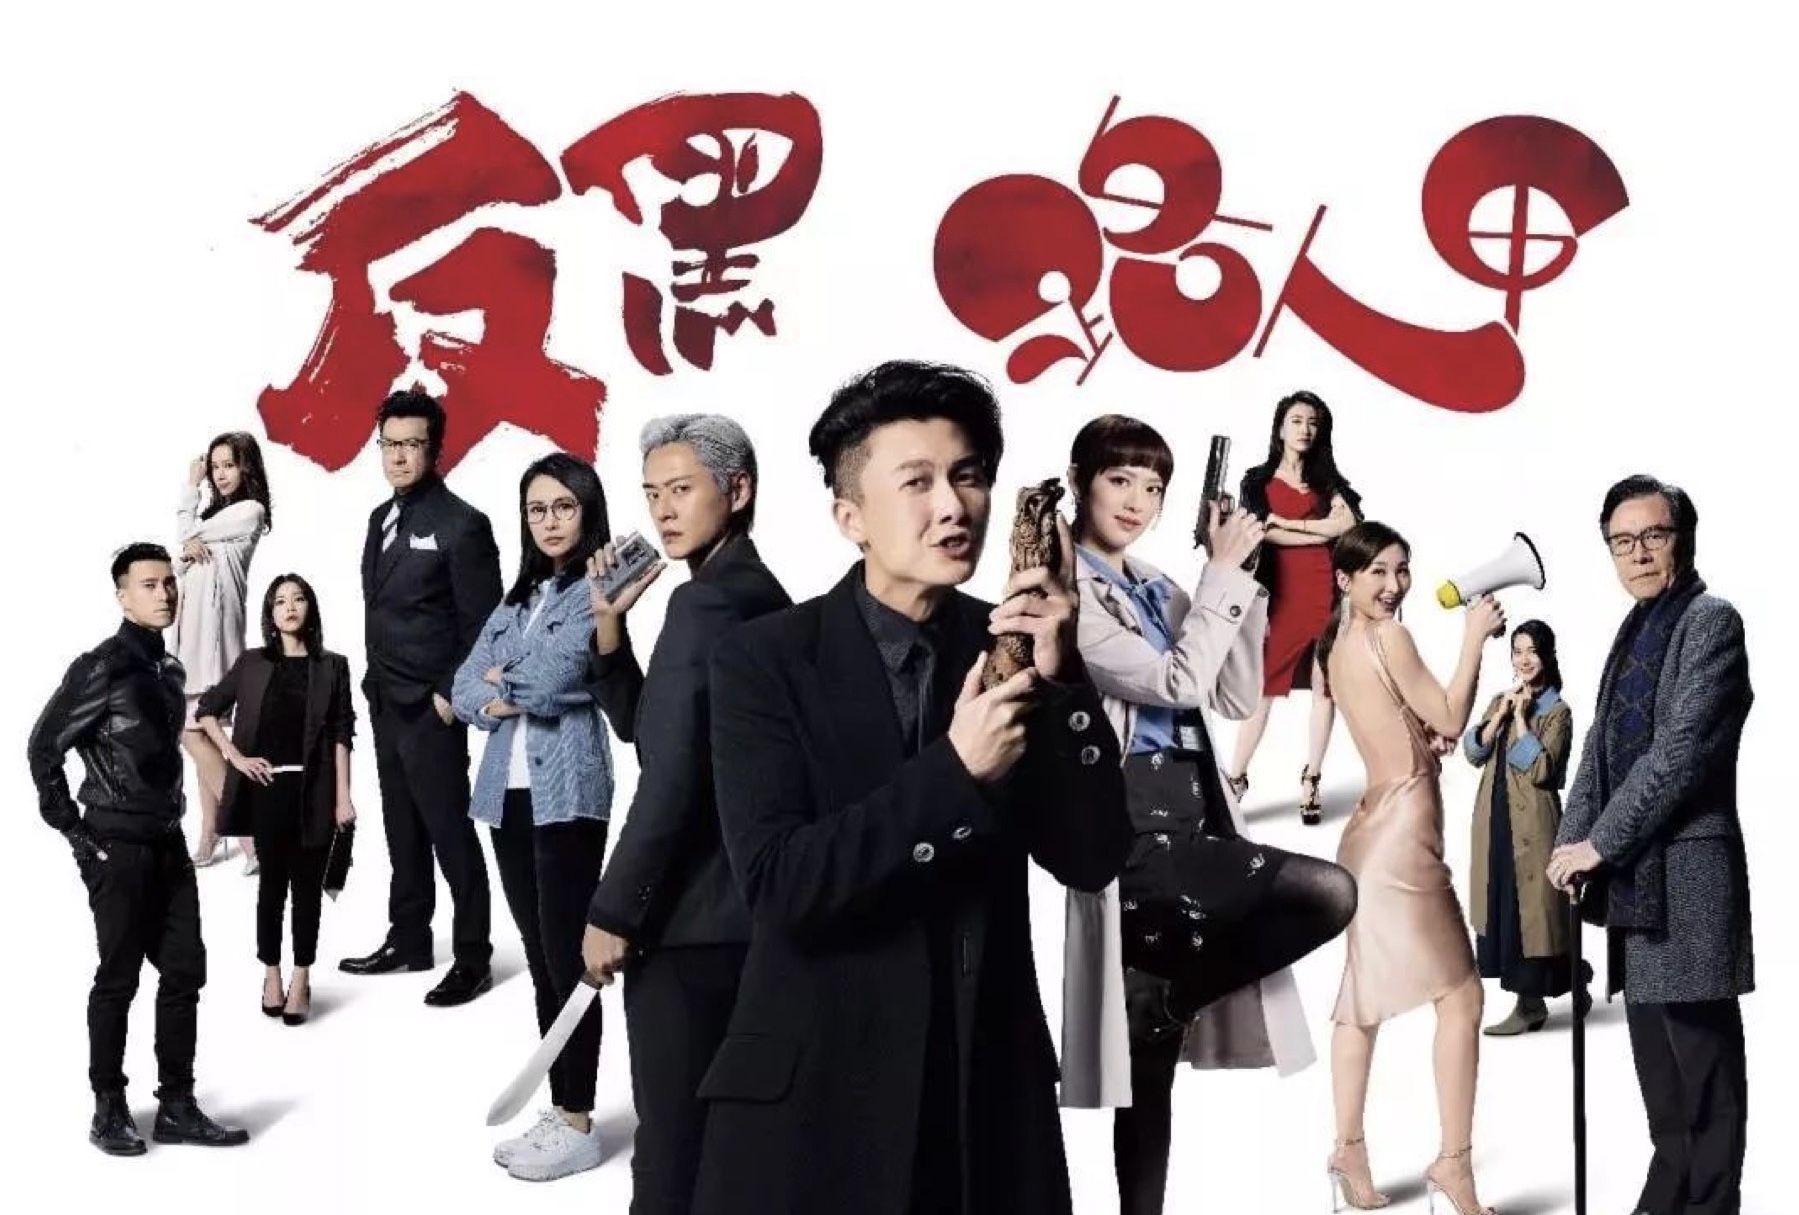 Upcoming TVB drama Al Cappuccino finally premiering in August 2020